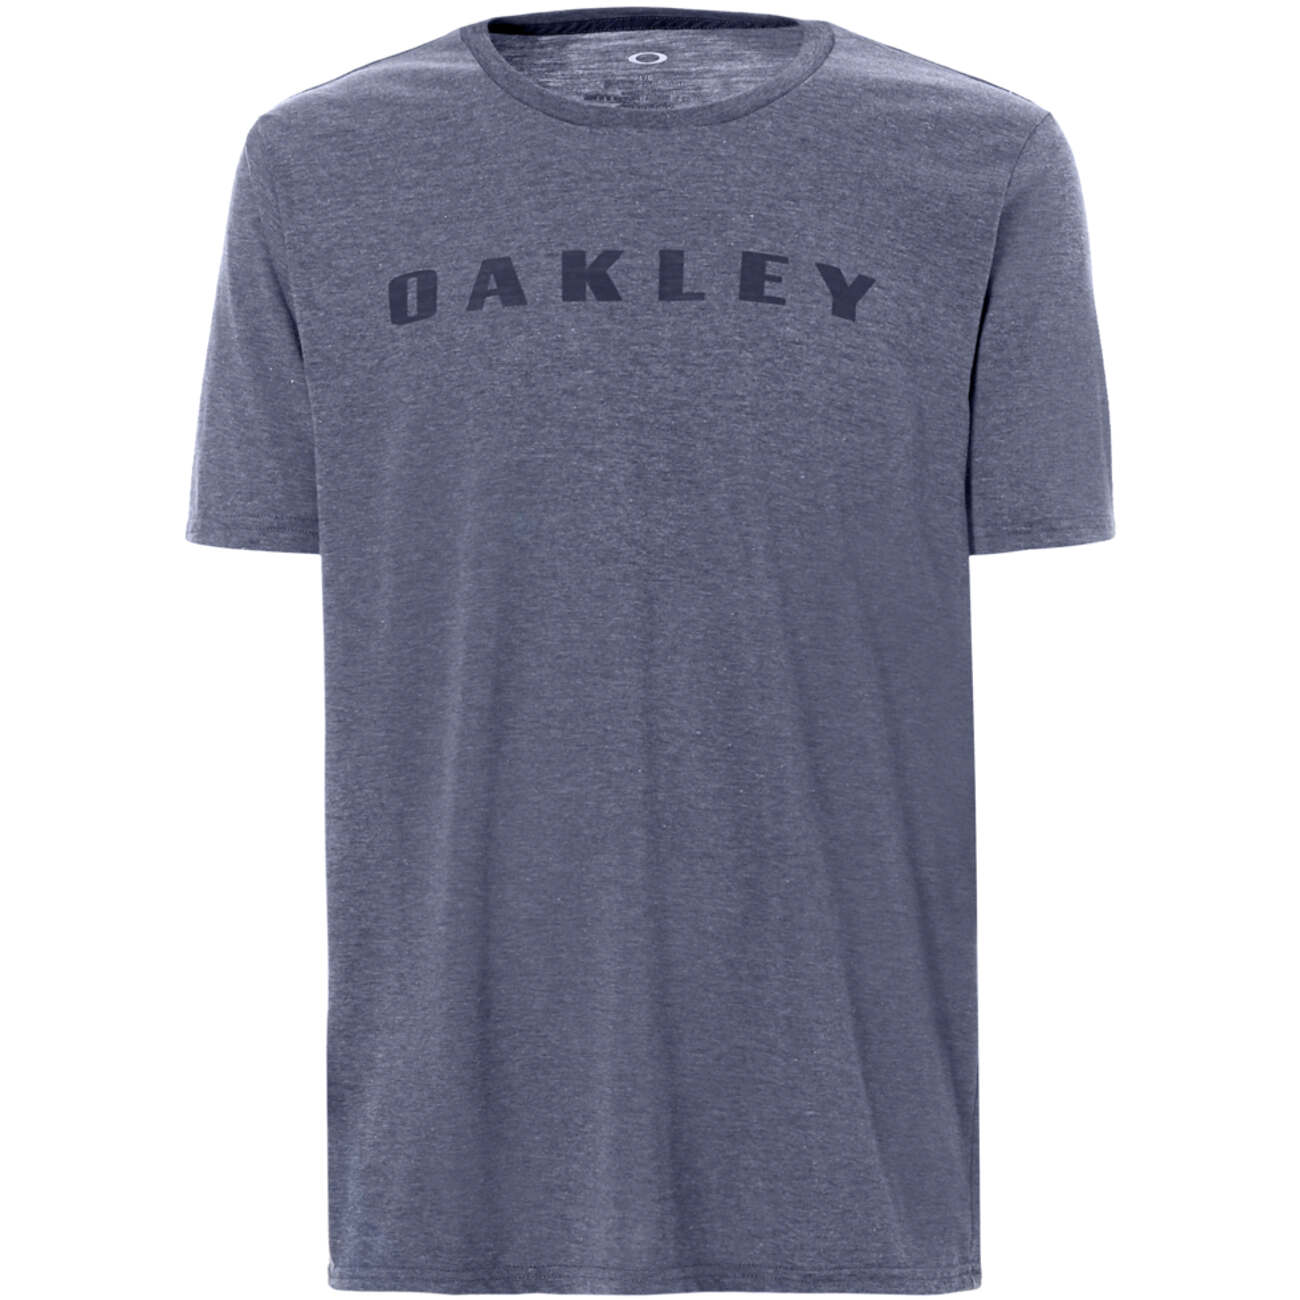 Oakley T-Shirt Burn Fathom Light Heather